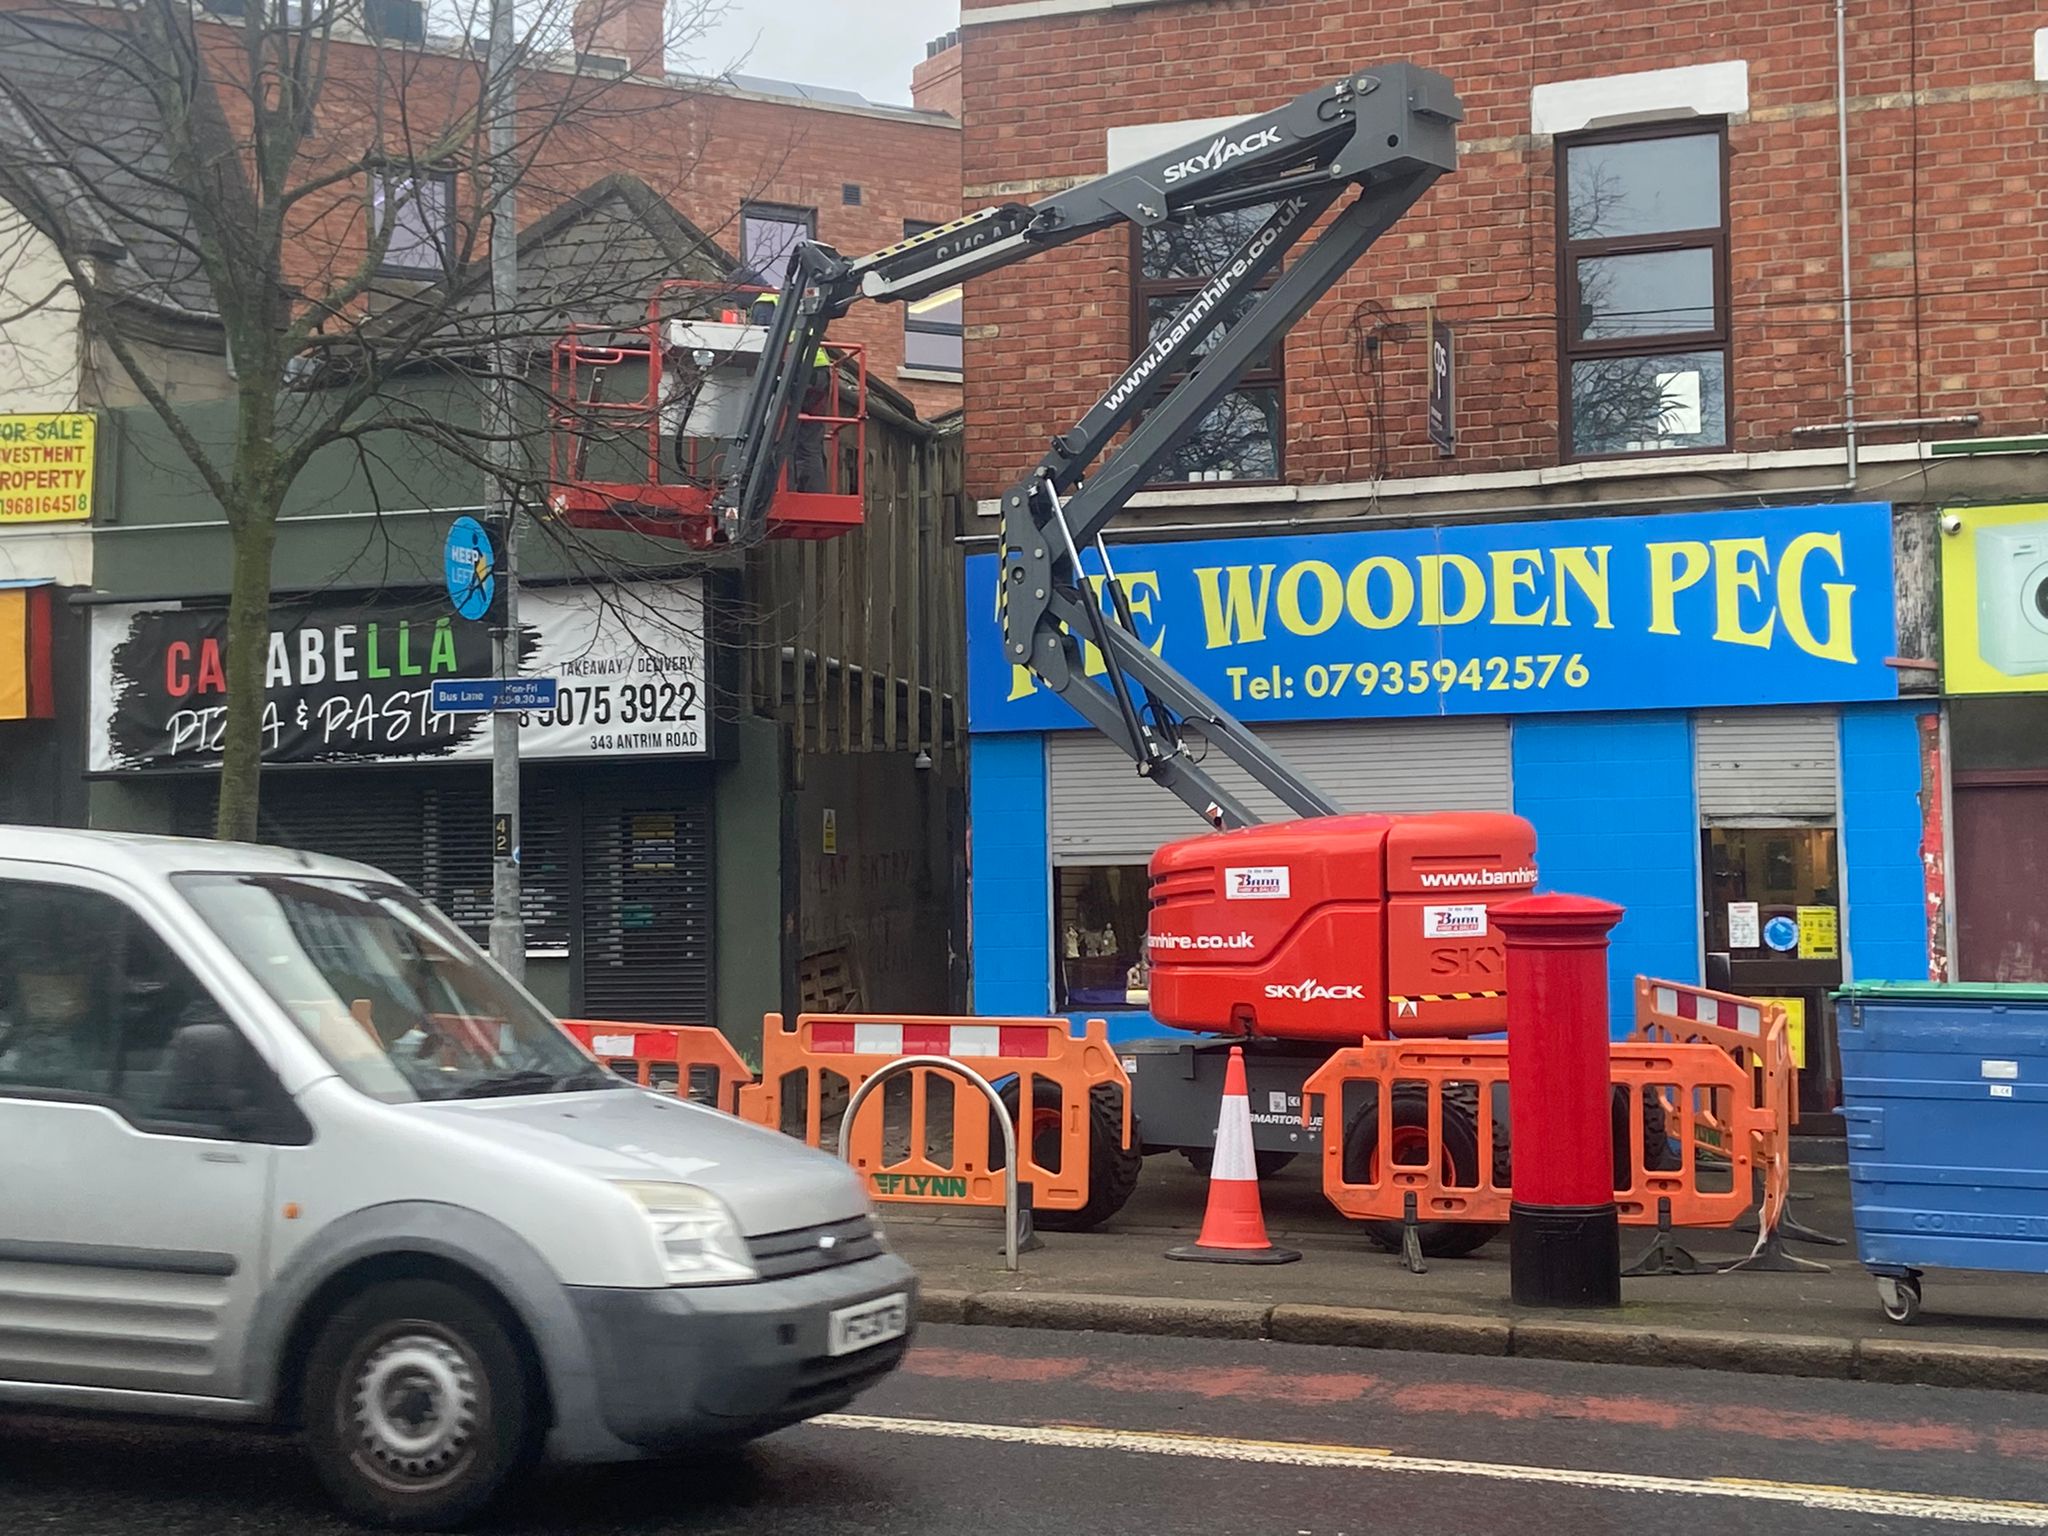 IMPROVEMENTS: Work begun on shop fronts opposite the Waterworks this week